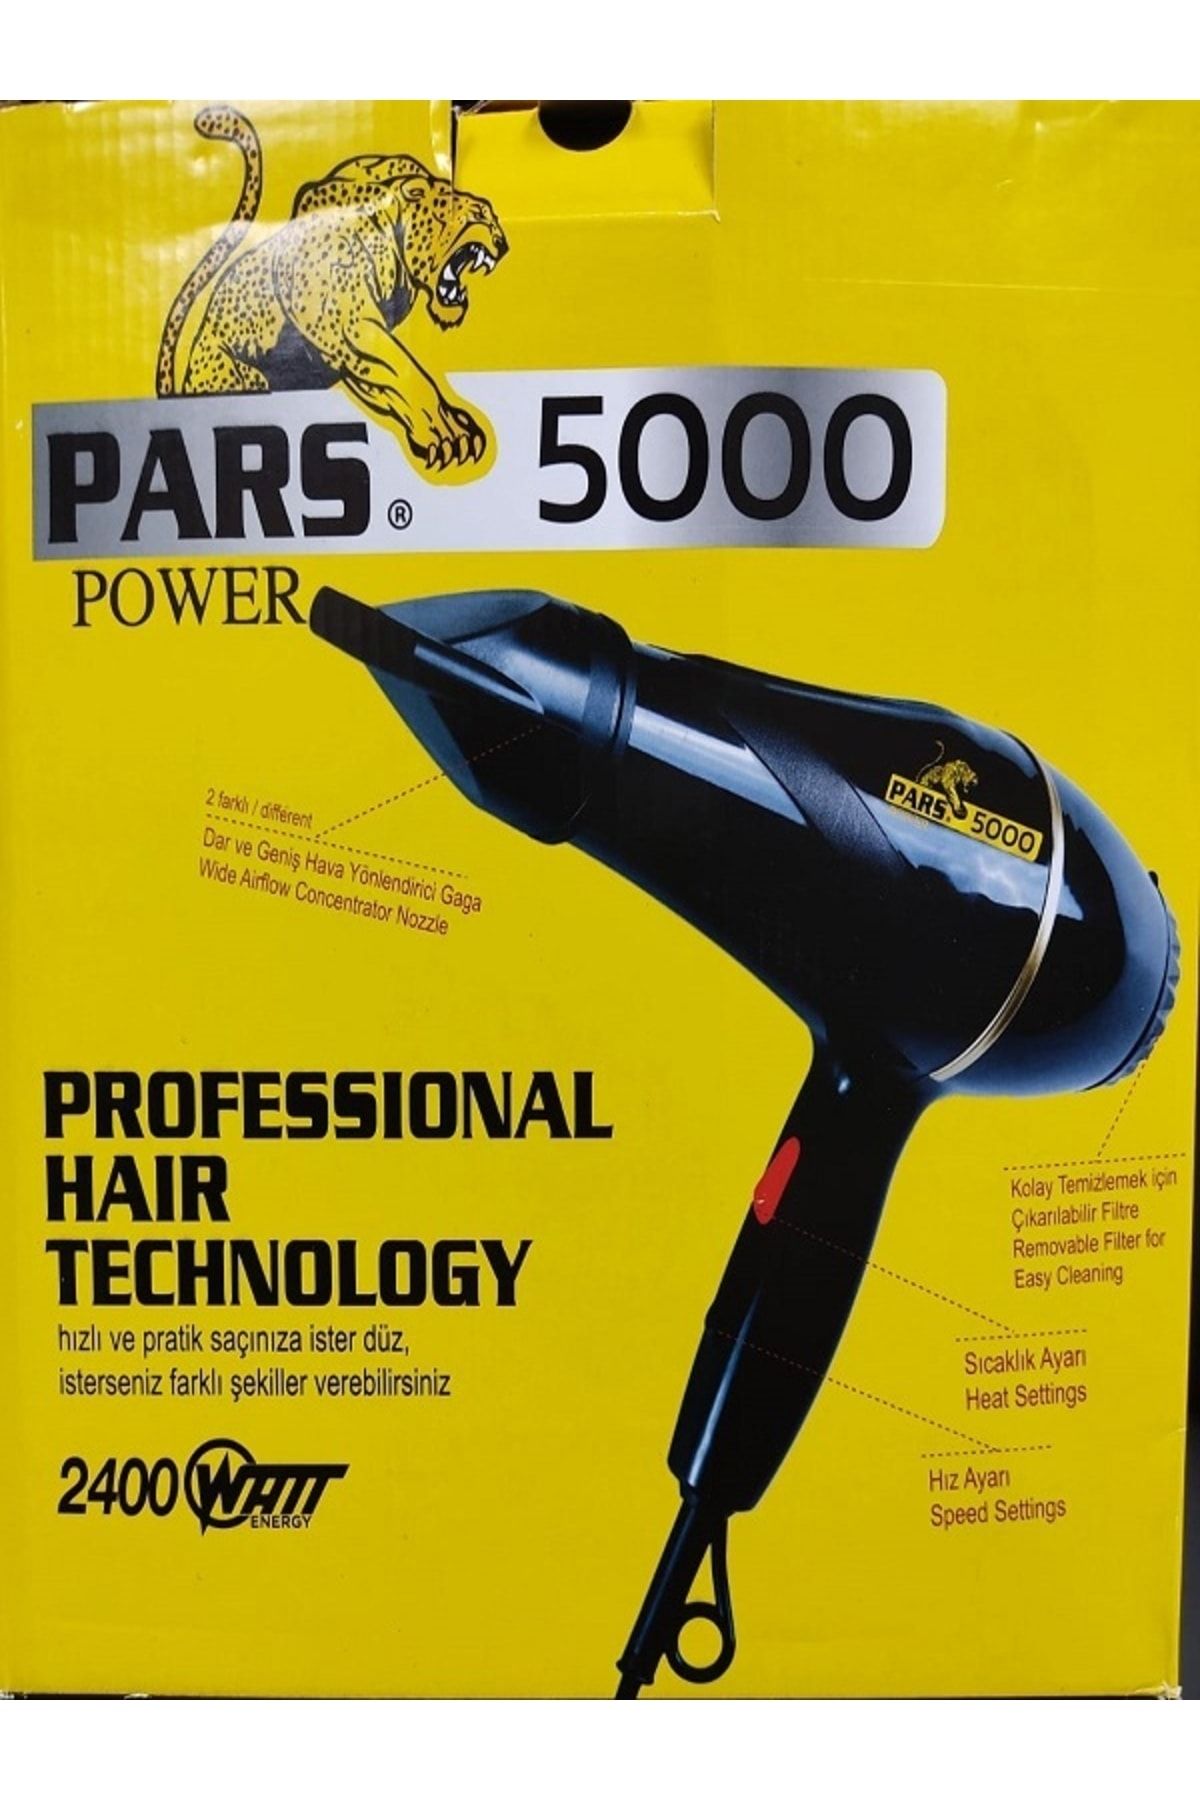 Pars Power 500 Profesyonel Siyah Renk Saç Kurutma Makinesi..keuskozmetik270406